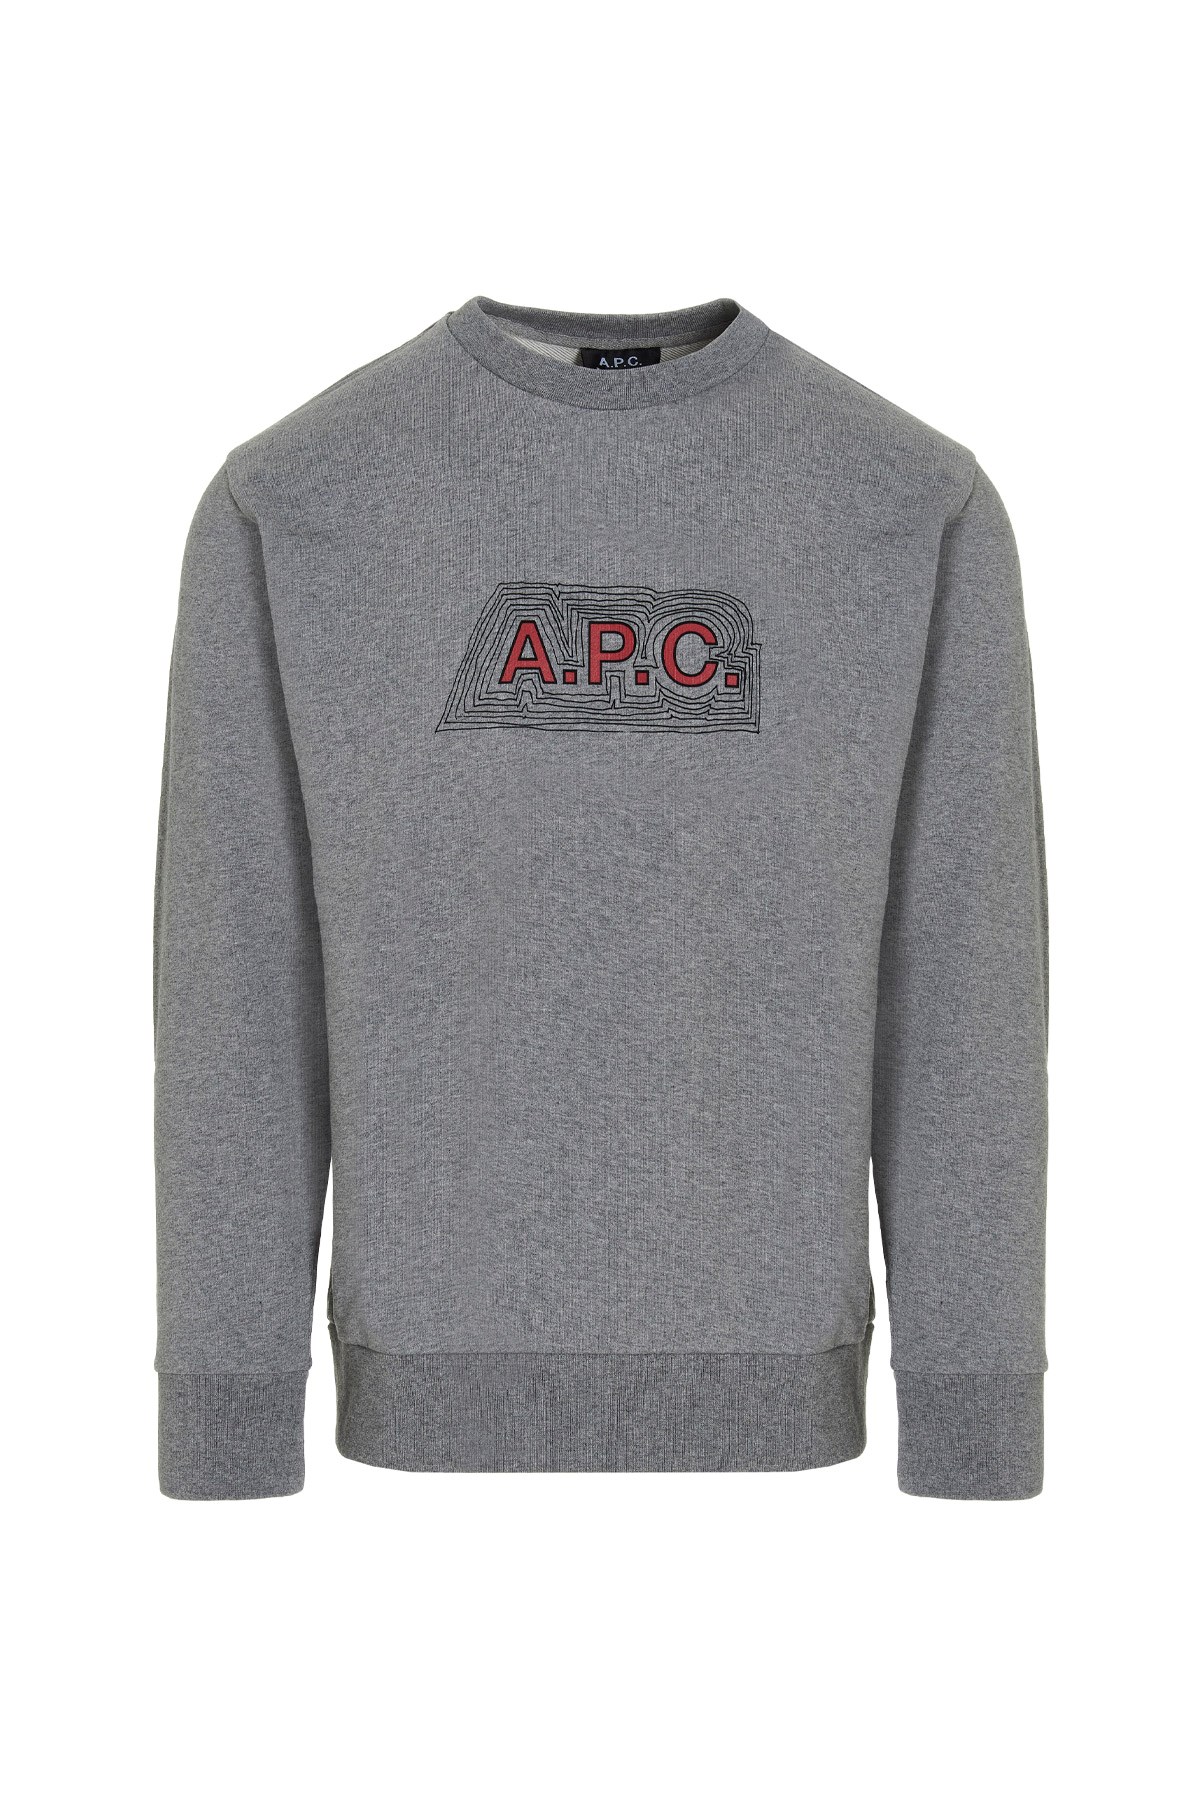 A.P.C. 'James' Sweatshirt